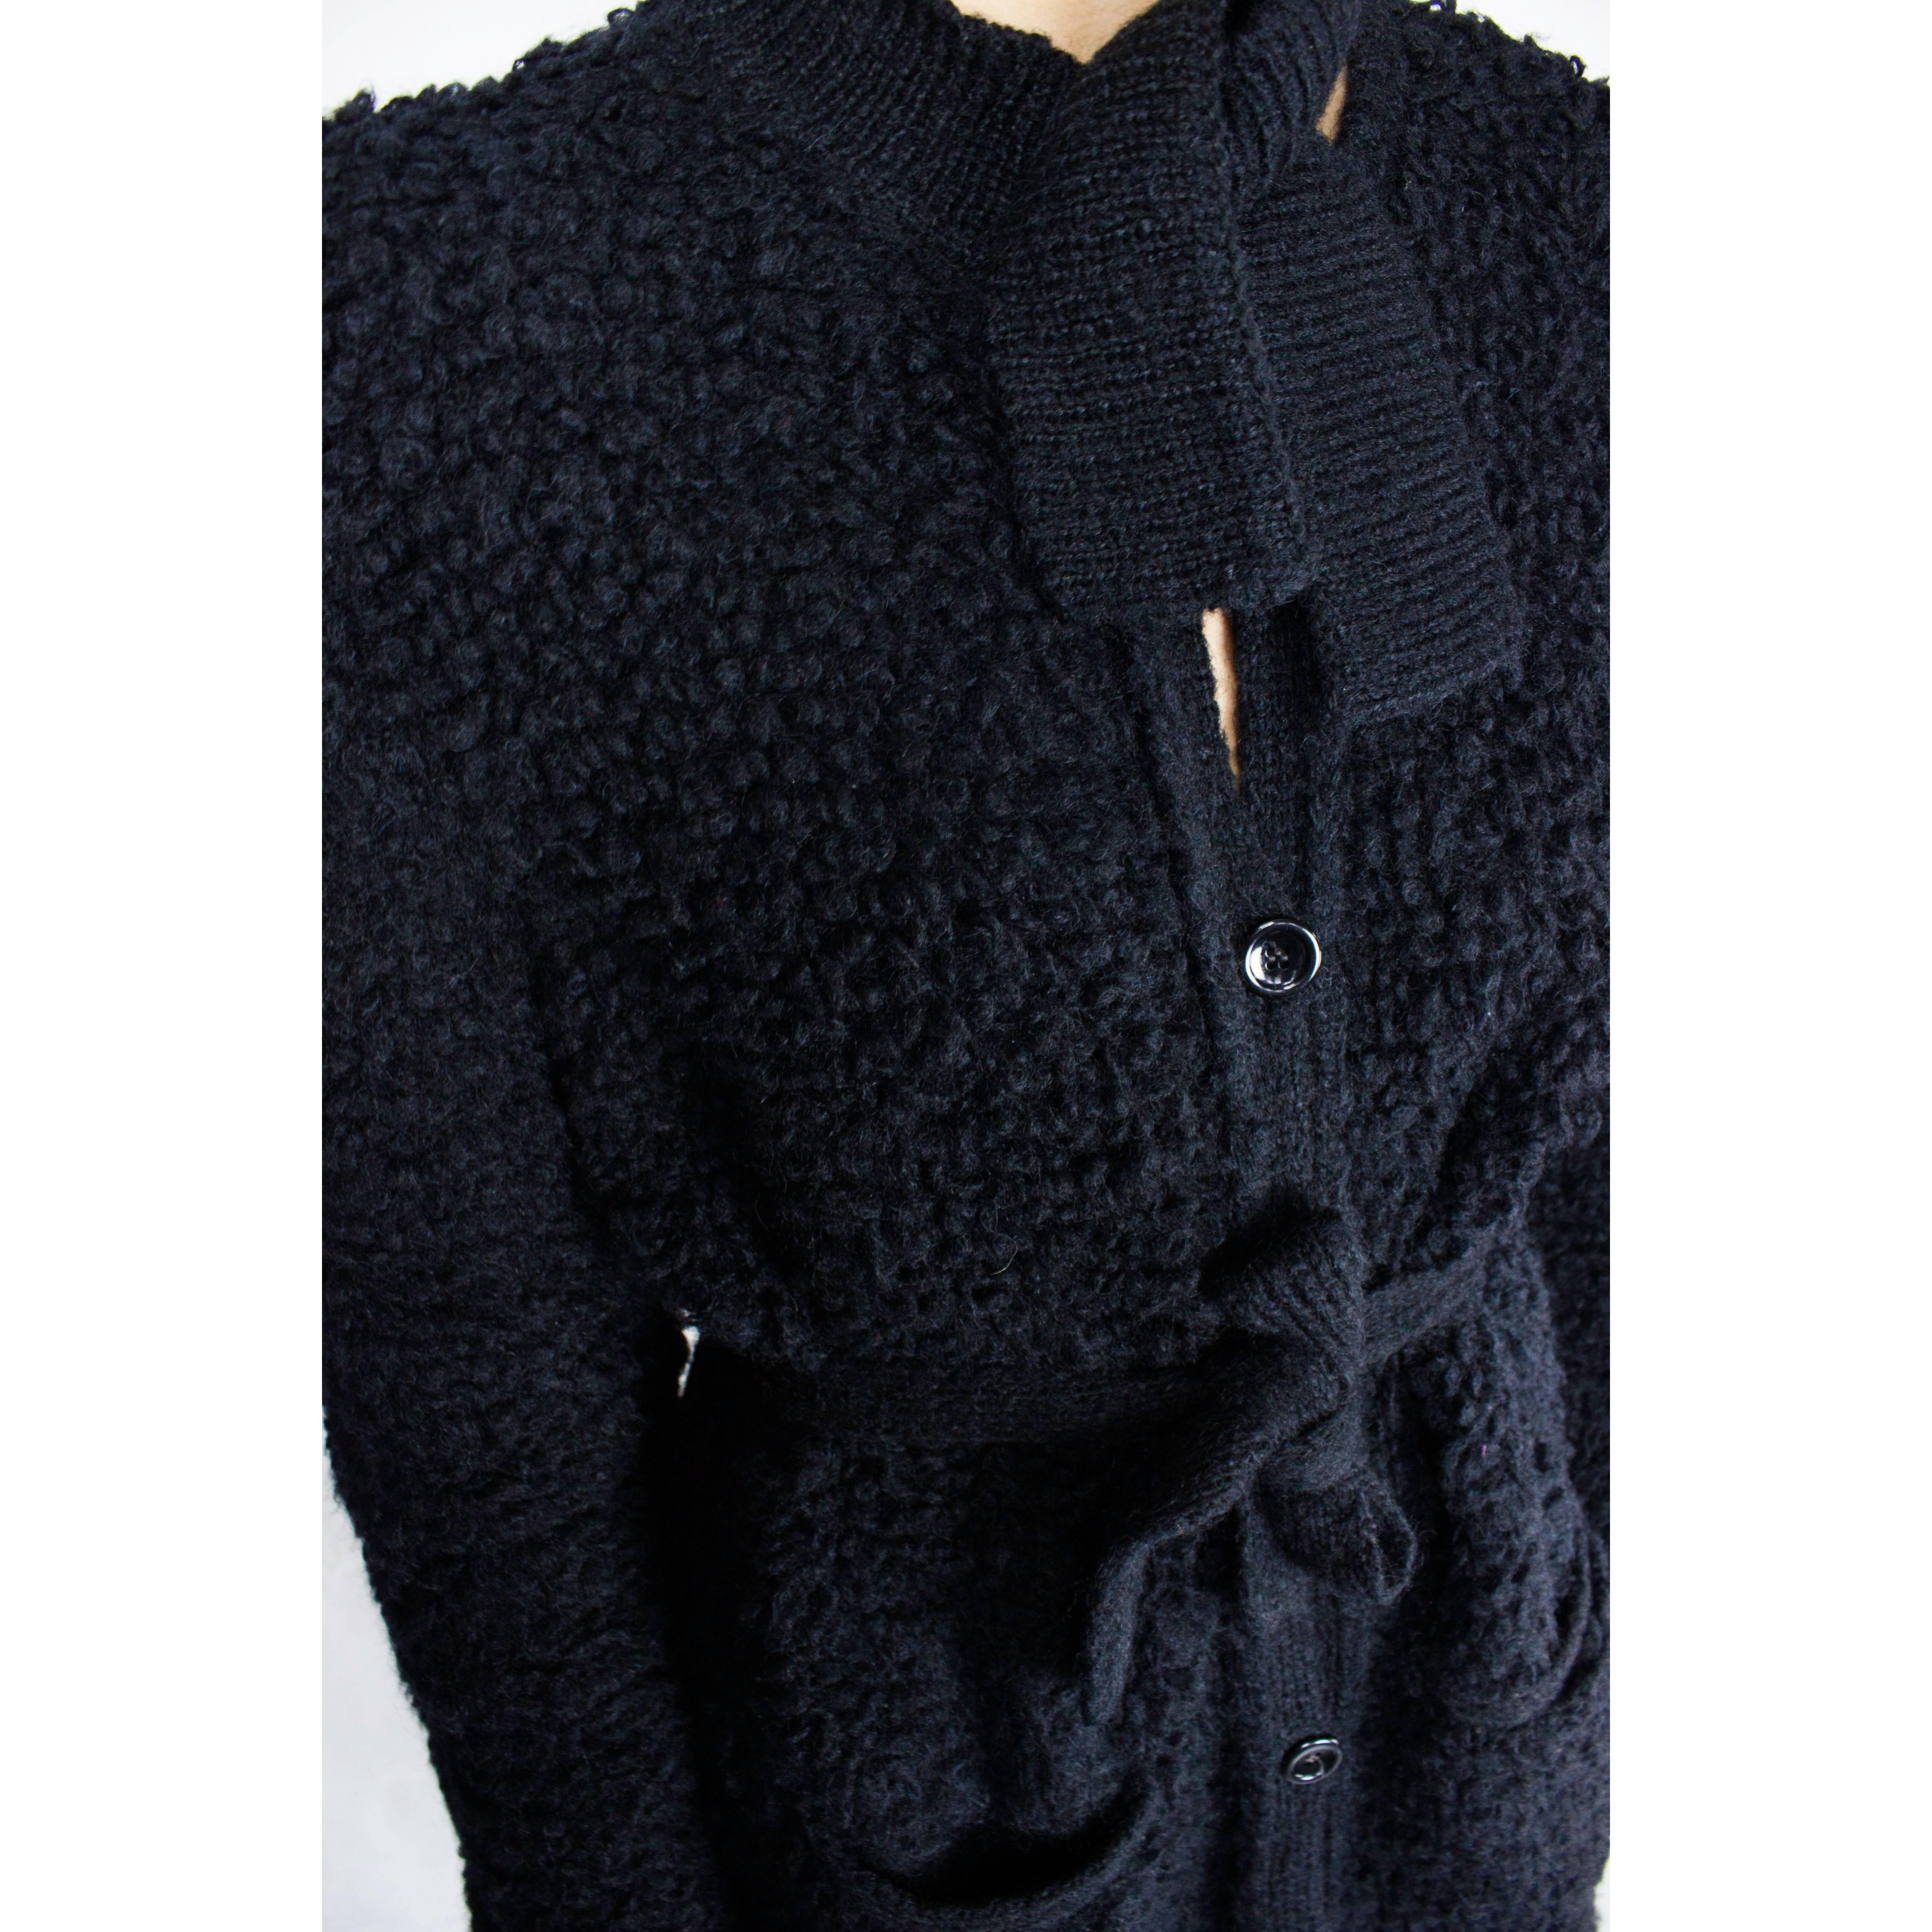 Important Sonia Rykiel knitted black wool coat, circa 1960s 2